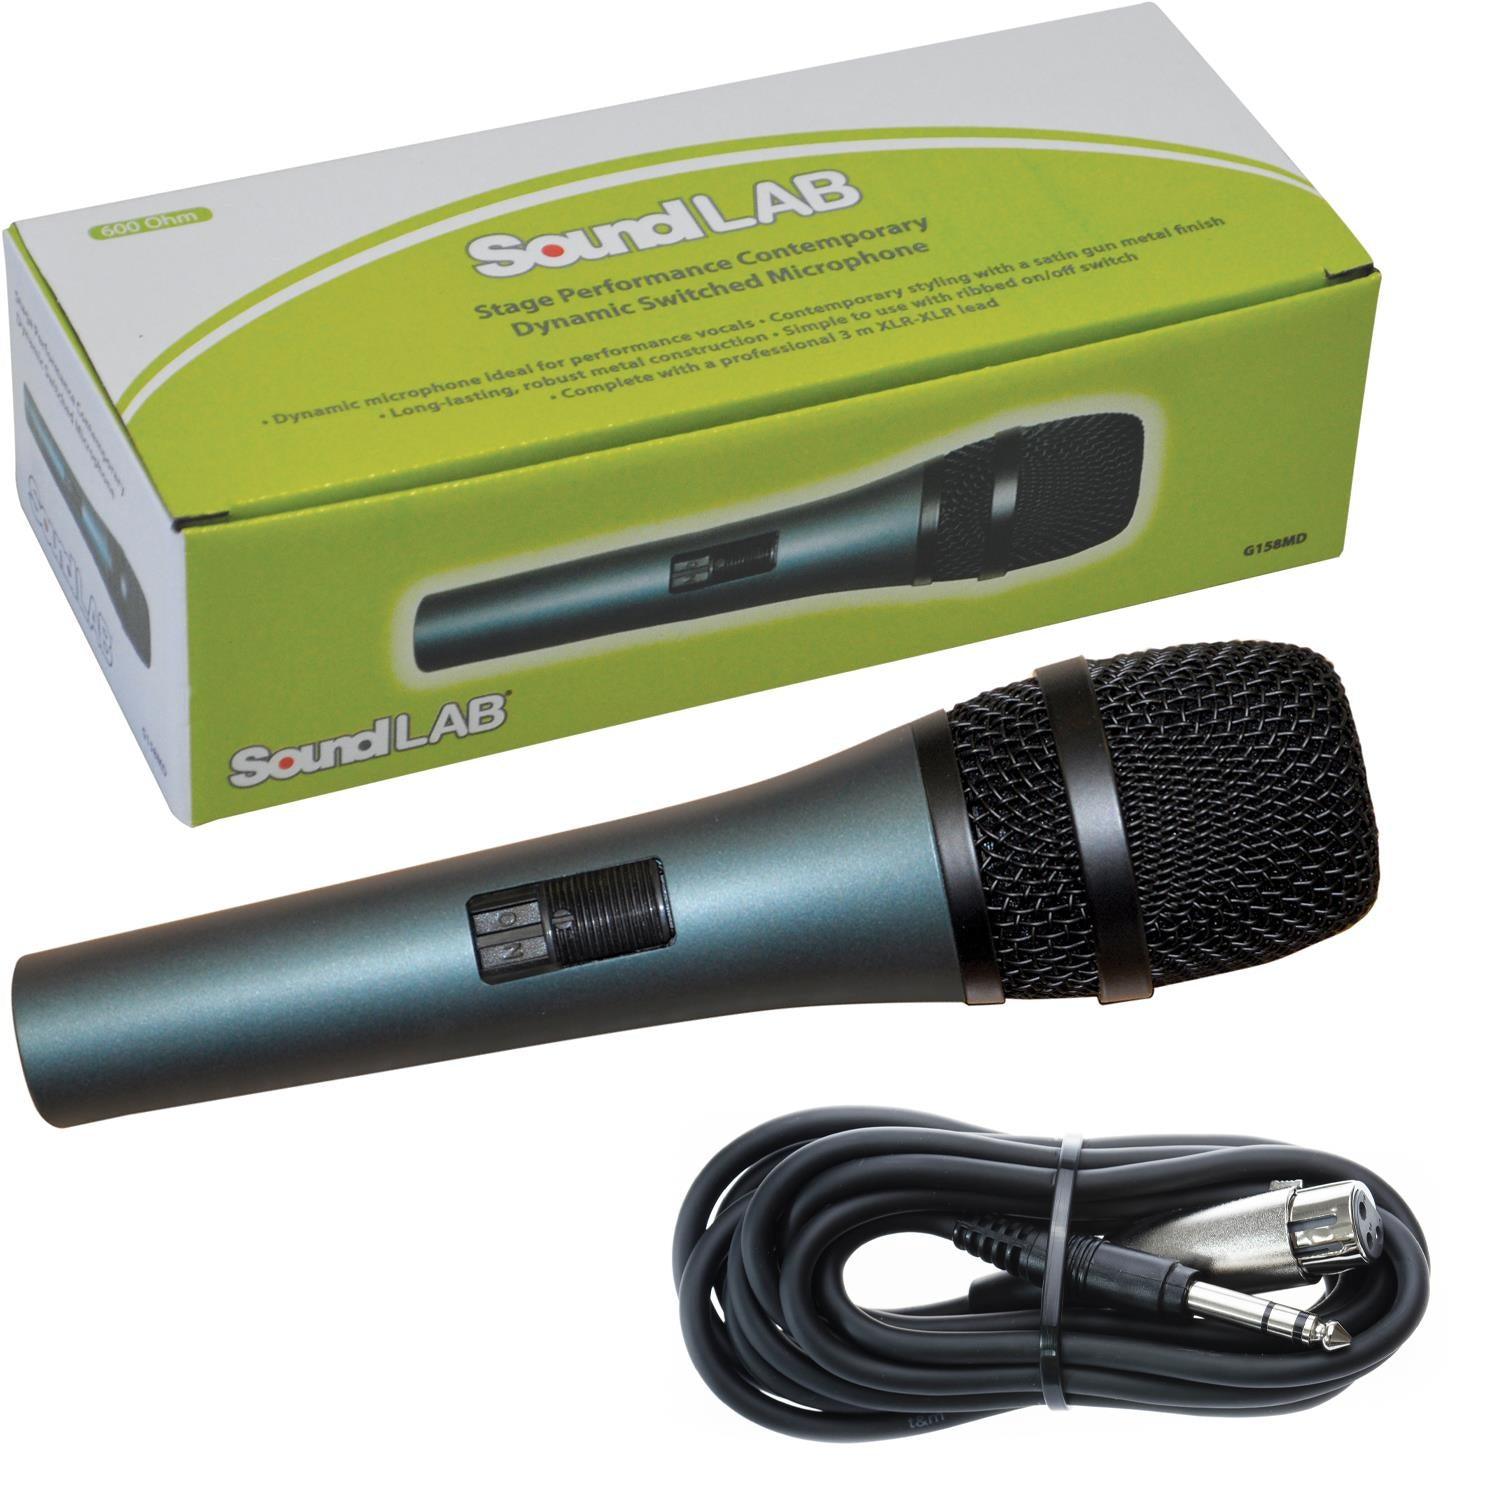 Soundlab Stage Performance Dynamic Microphone - DY Pro Audio